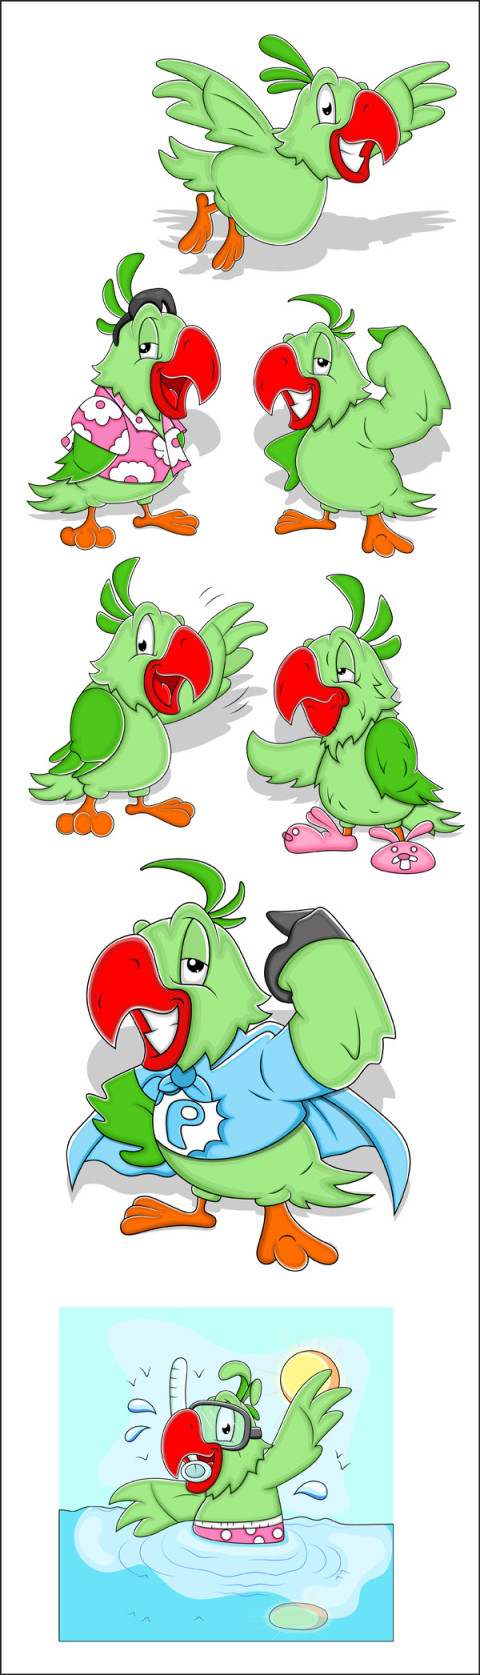 Cartoon Parrot Illustration Vectors PNG Images With Transparent Background